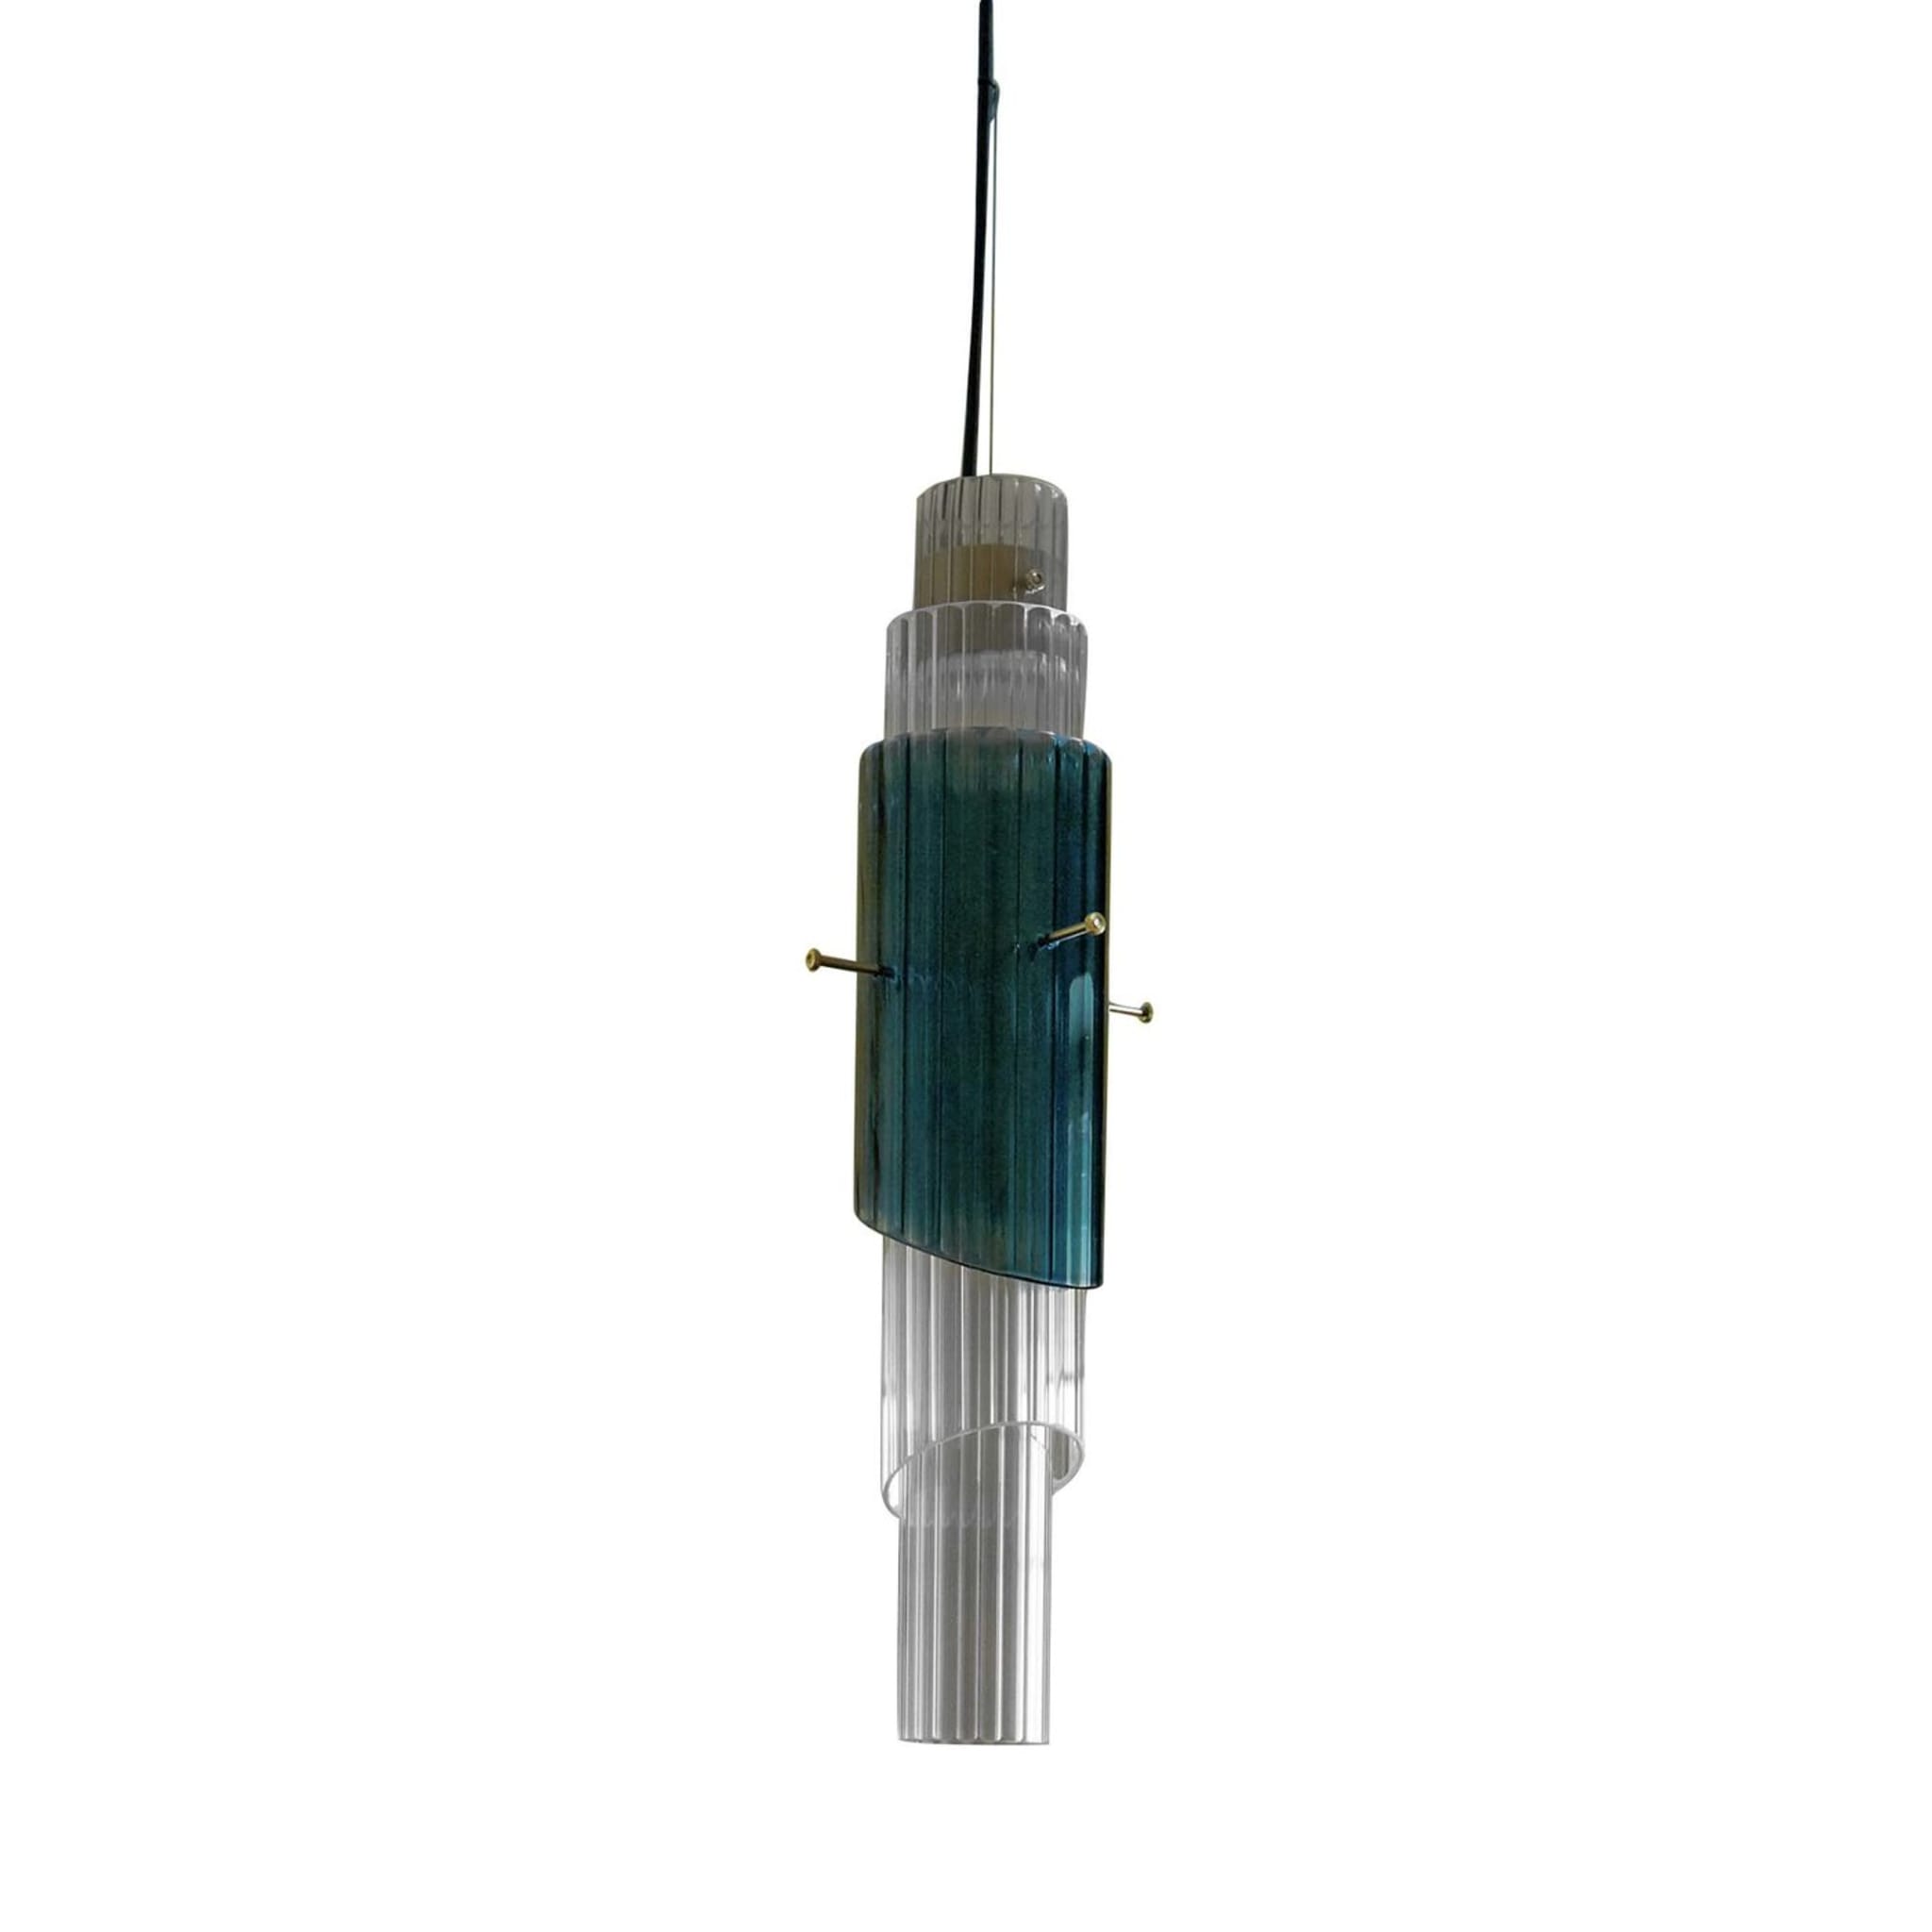 Sbarlusc Pendant Lamp by Isacco Brioschi - Main view